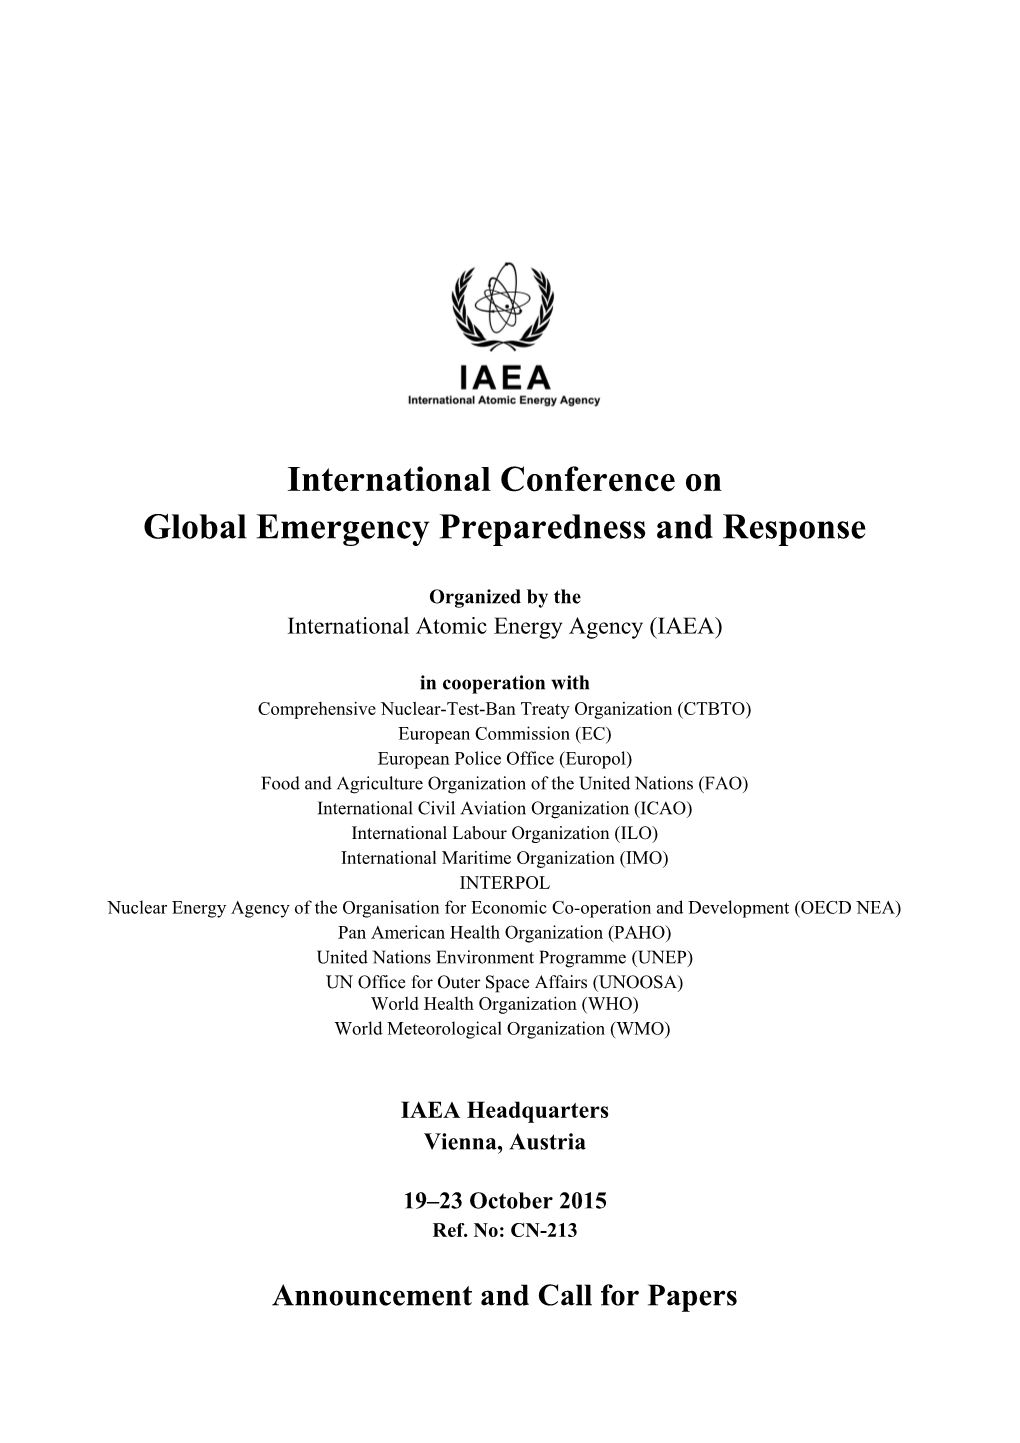 Global Emergency Preparedness and Response